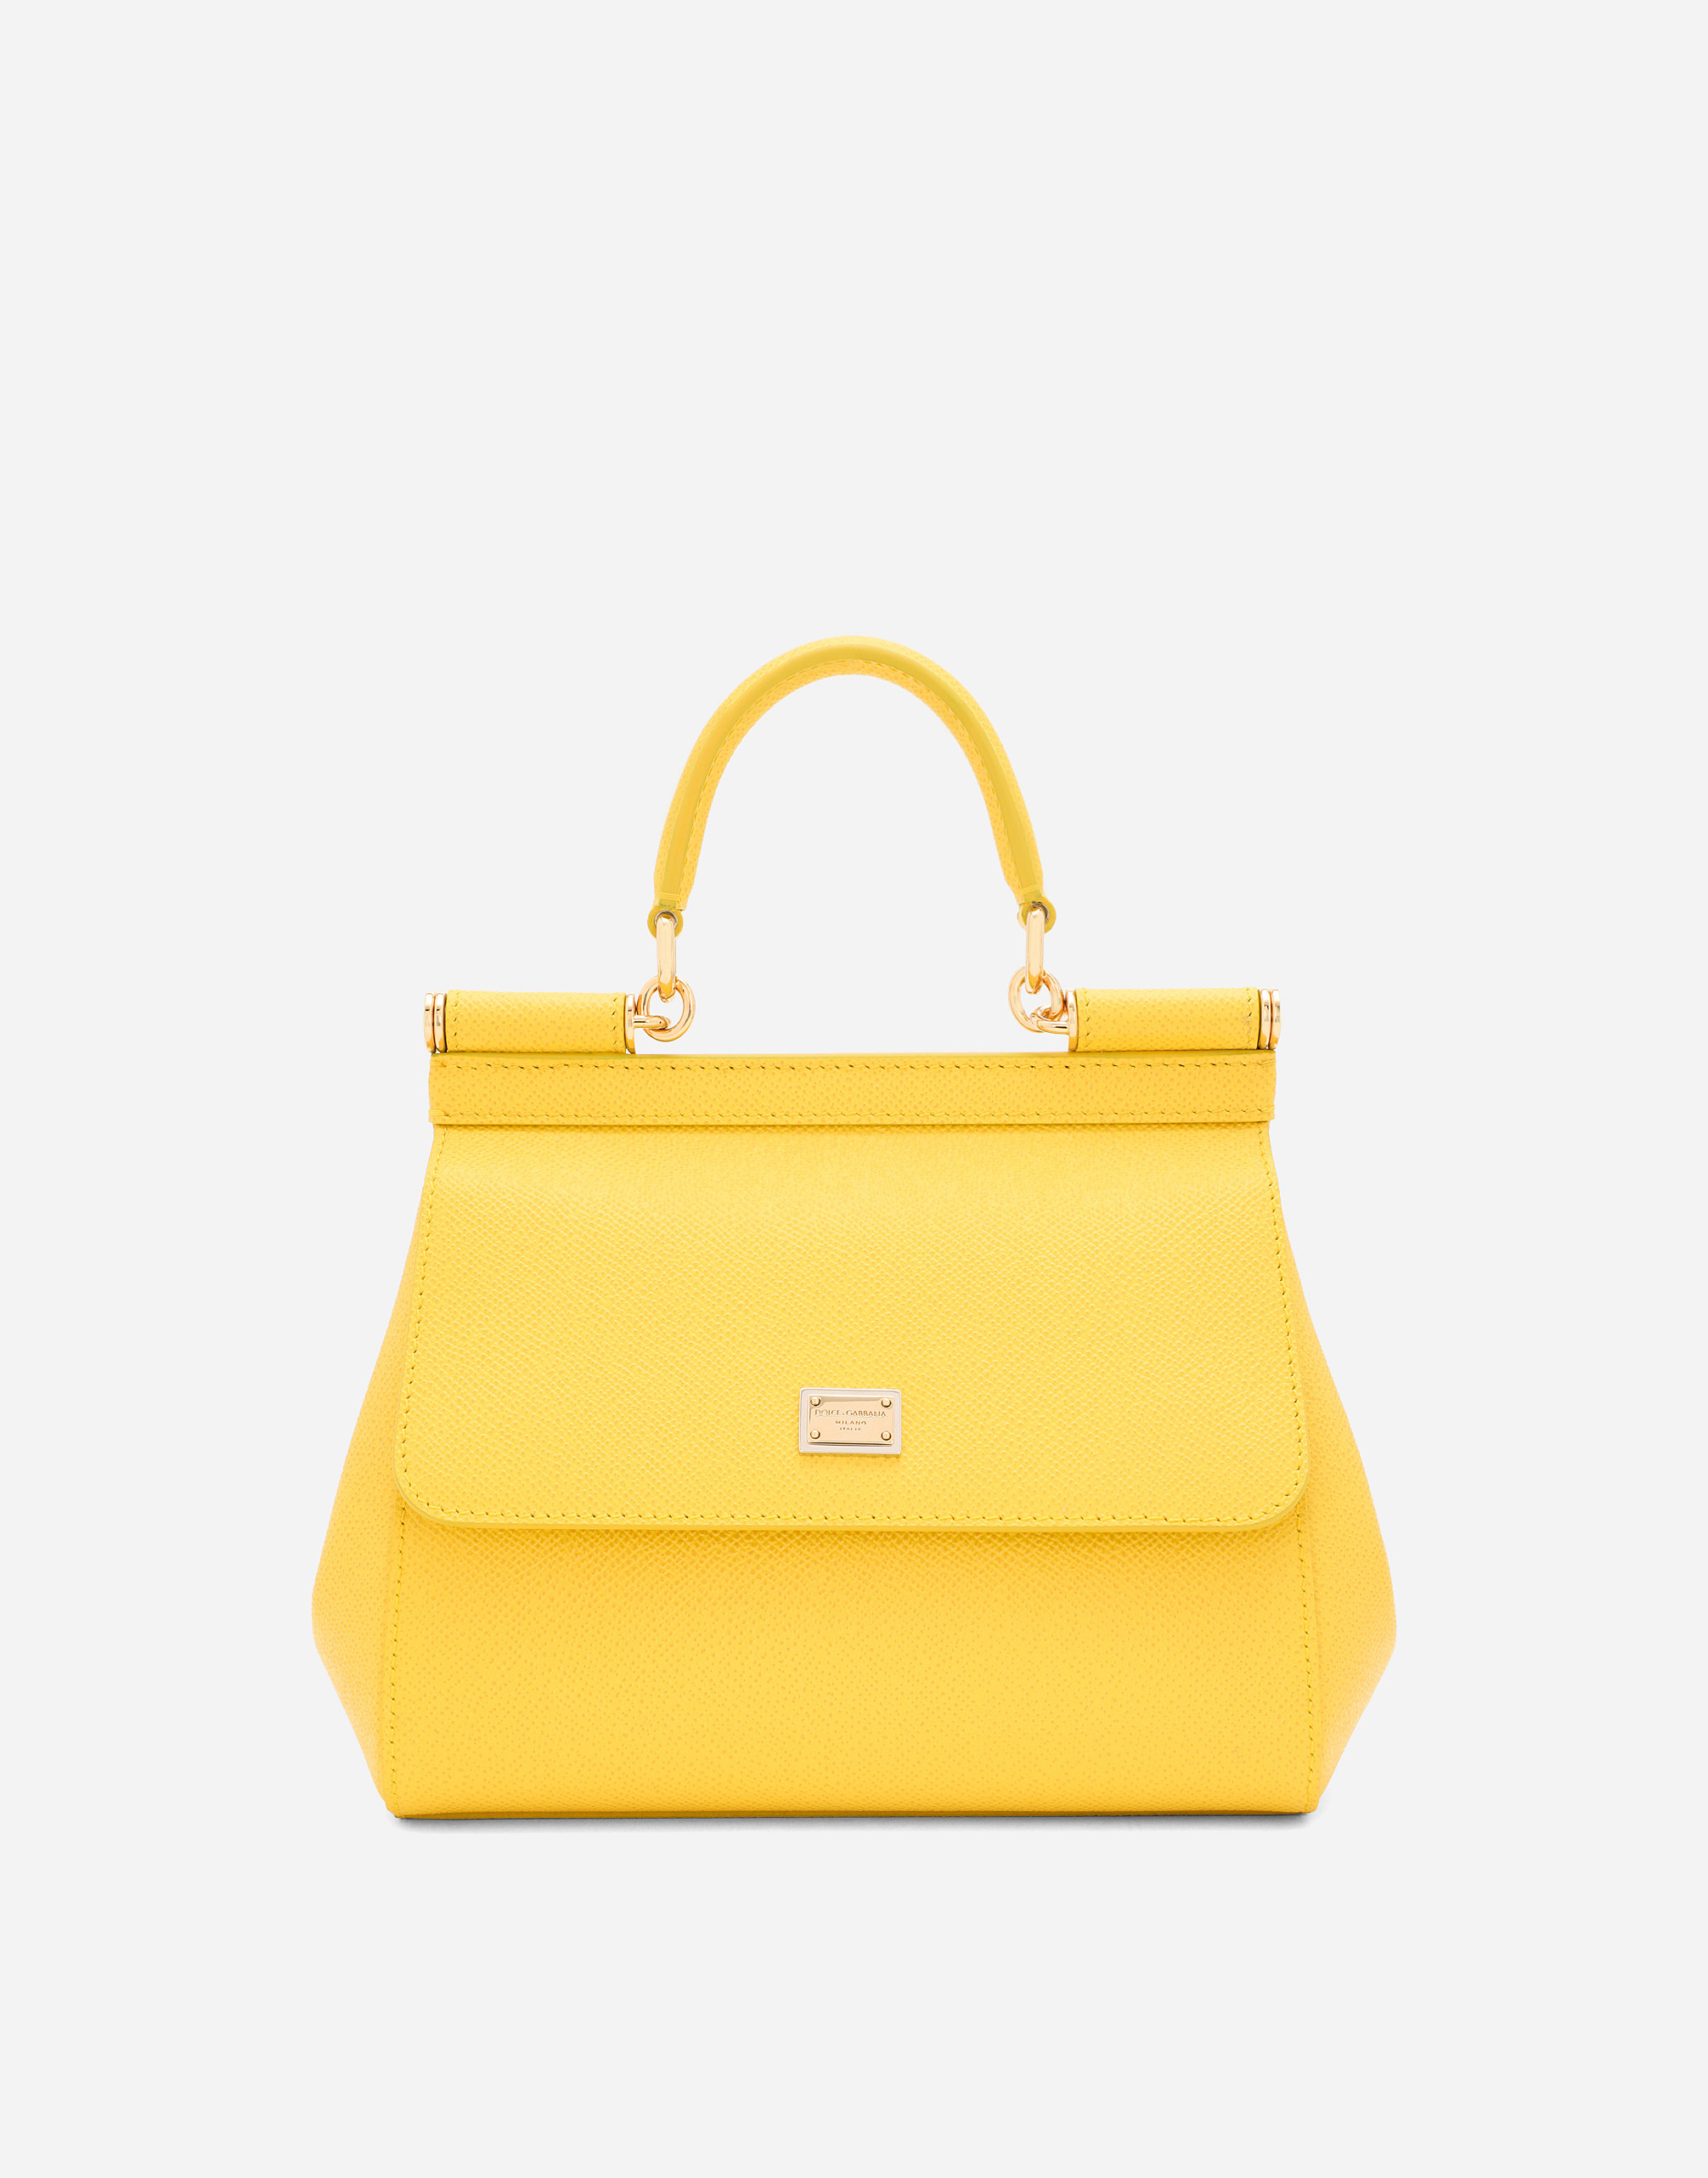 Medium Sicily handbag in Yellow